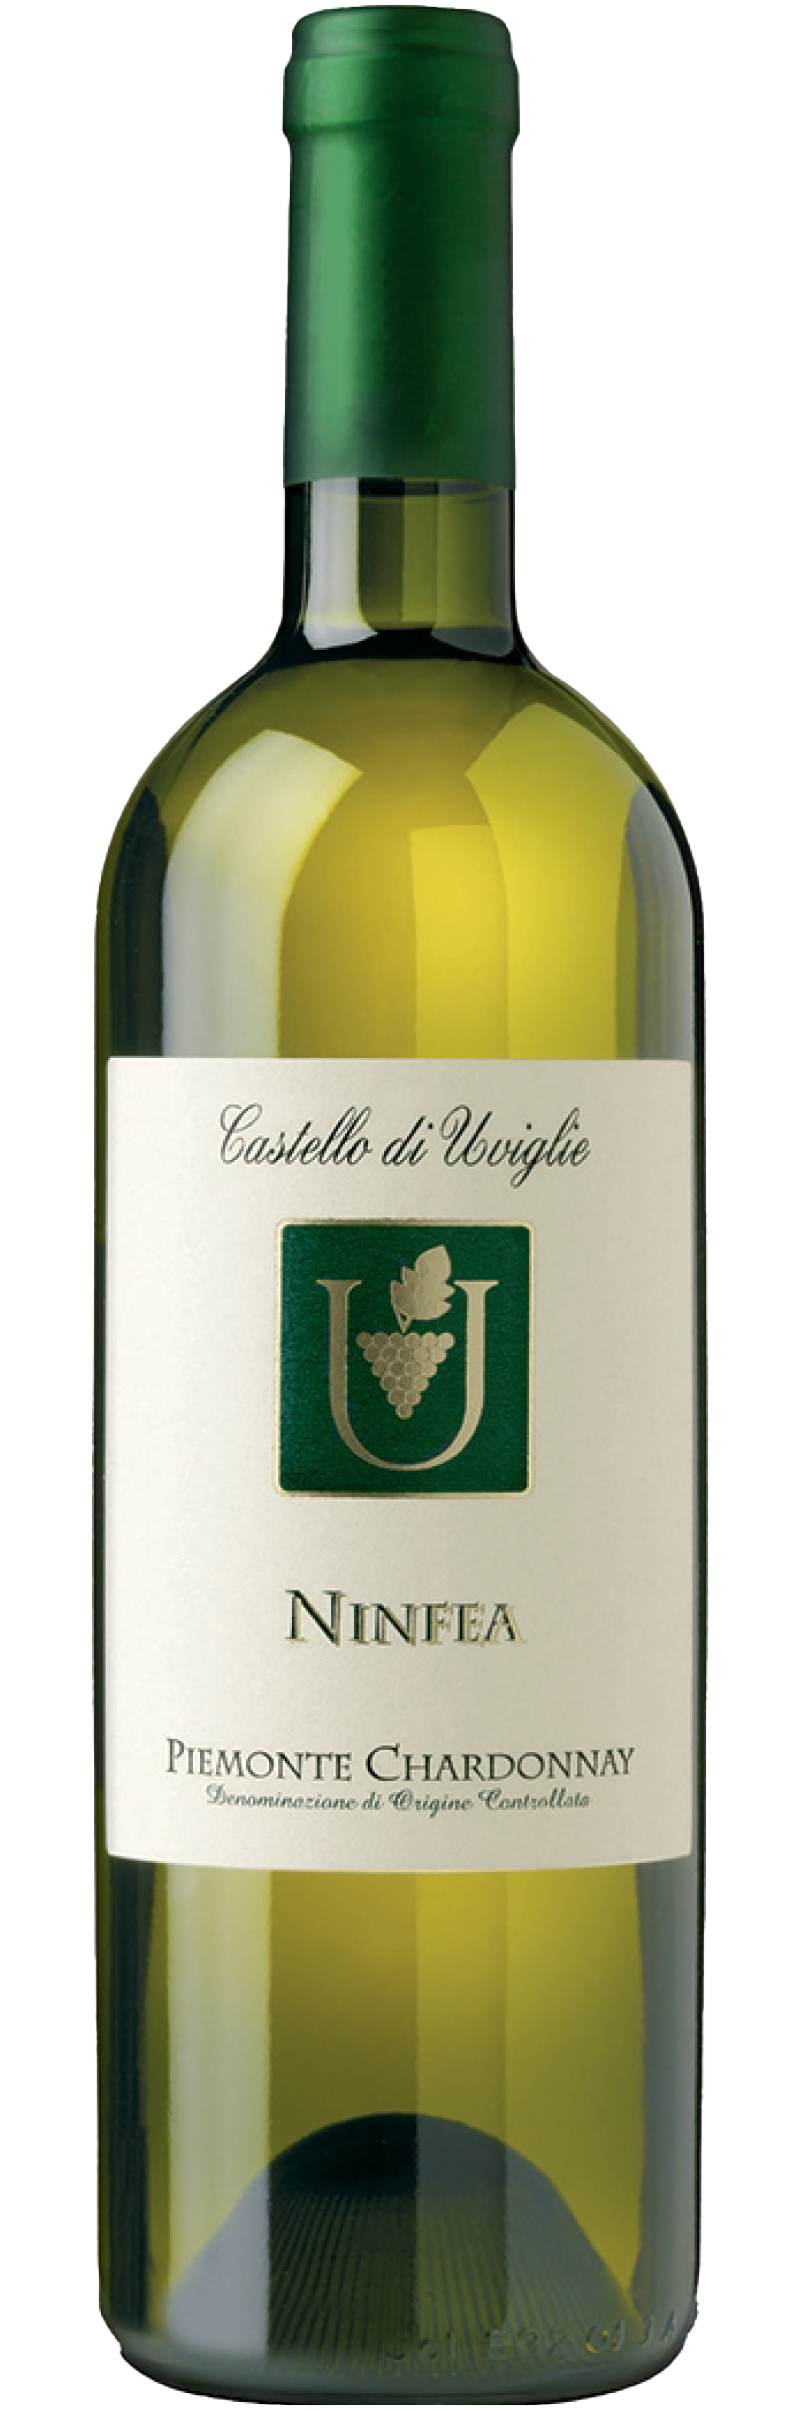 Ninfea Piemonte Chardonnay DOC - Cantina: Castello d'Uviglie